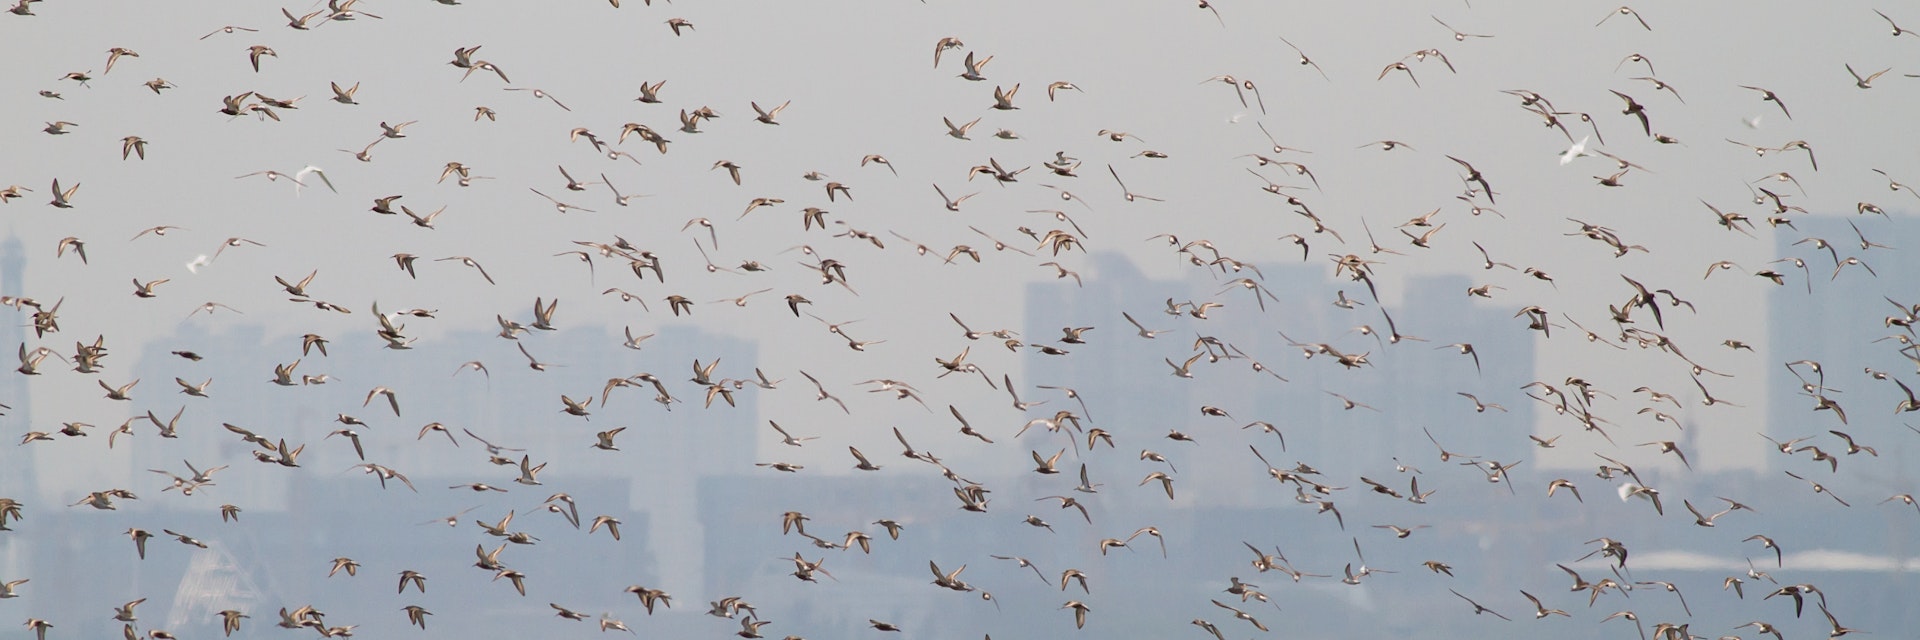 500px Photo ID: 75122263 - Sea birds at Mai Po Nature Reserve of Hong Kong